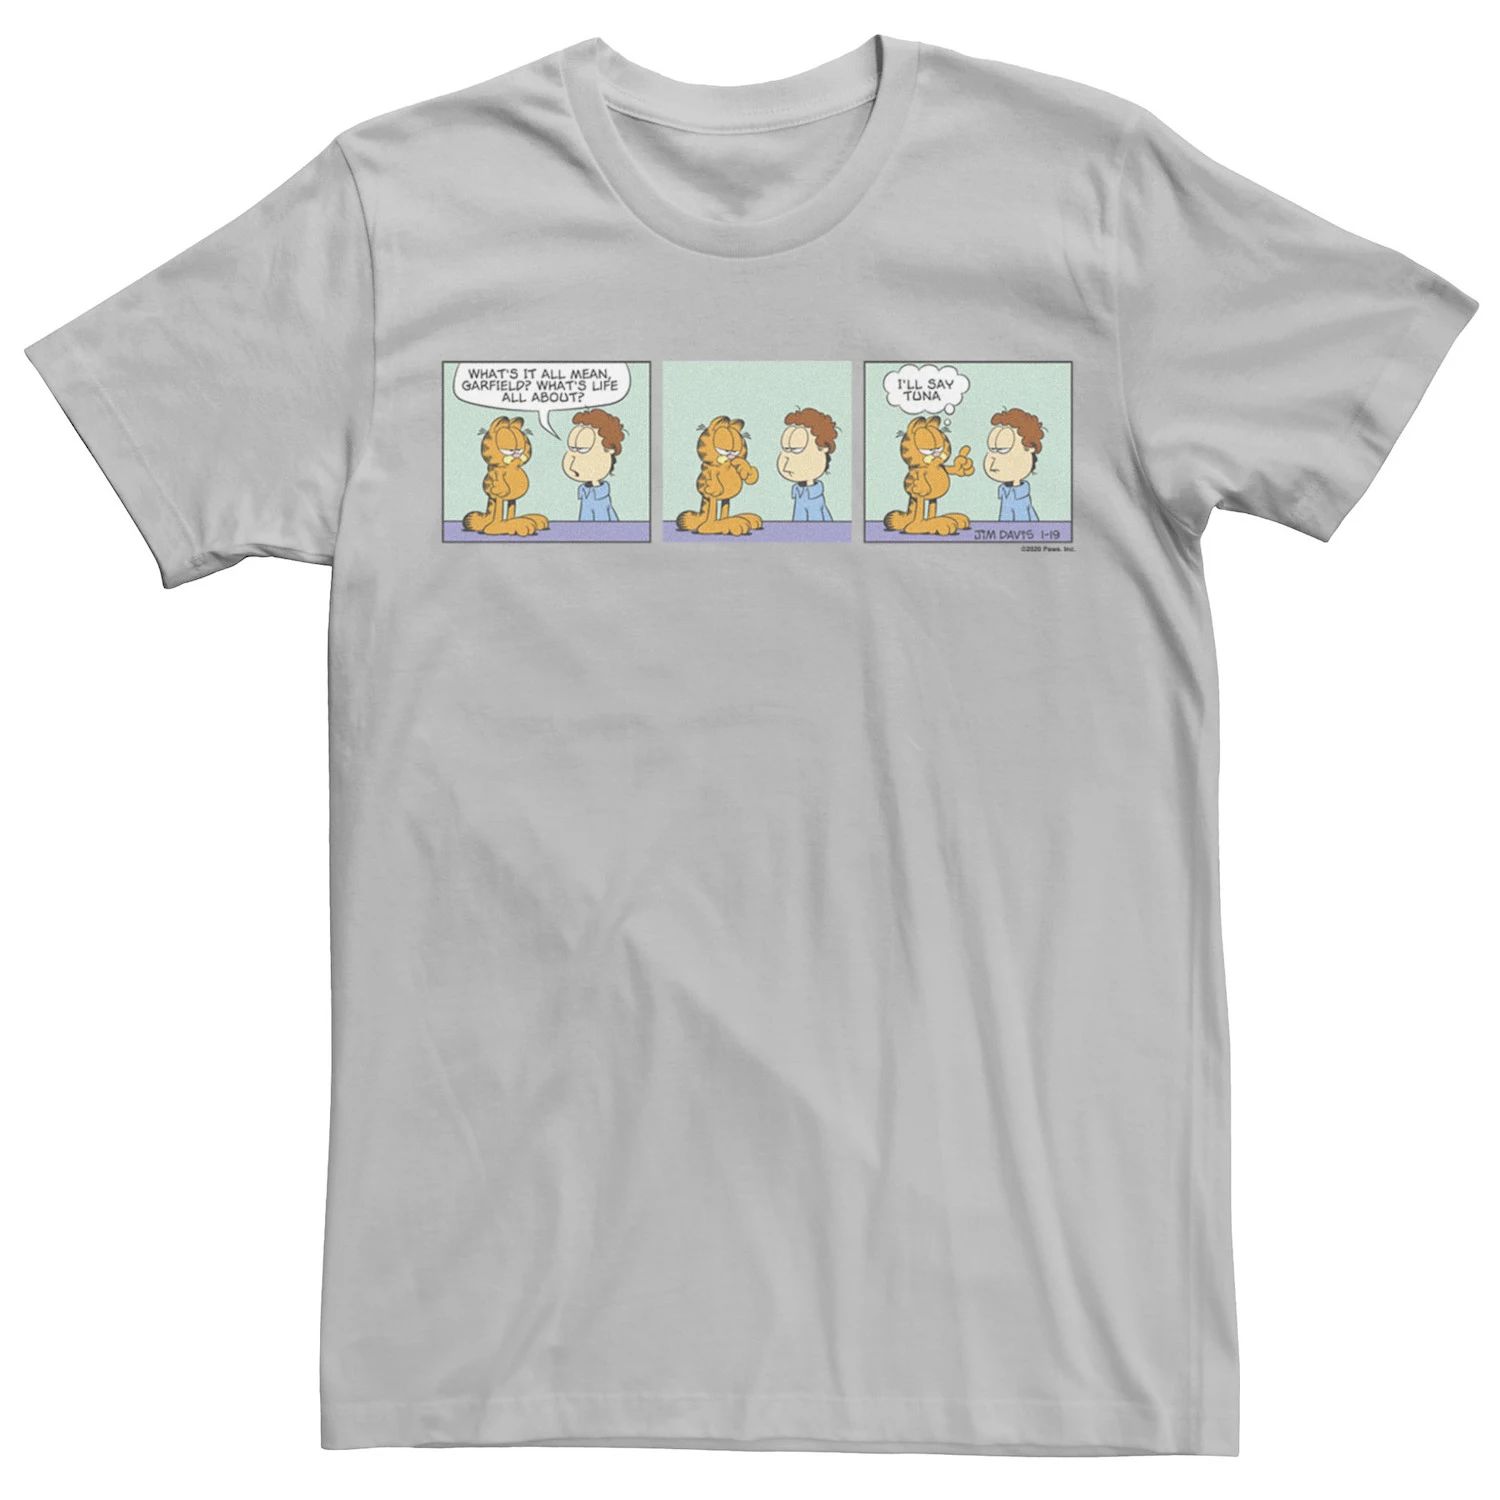 Мужская футболка с изображением комиксов Garfield Tuna Food Licensed Character